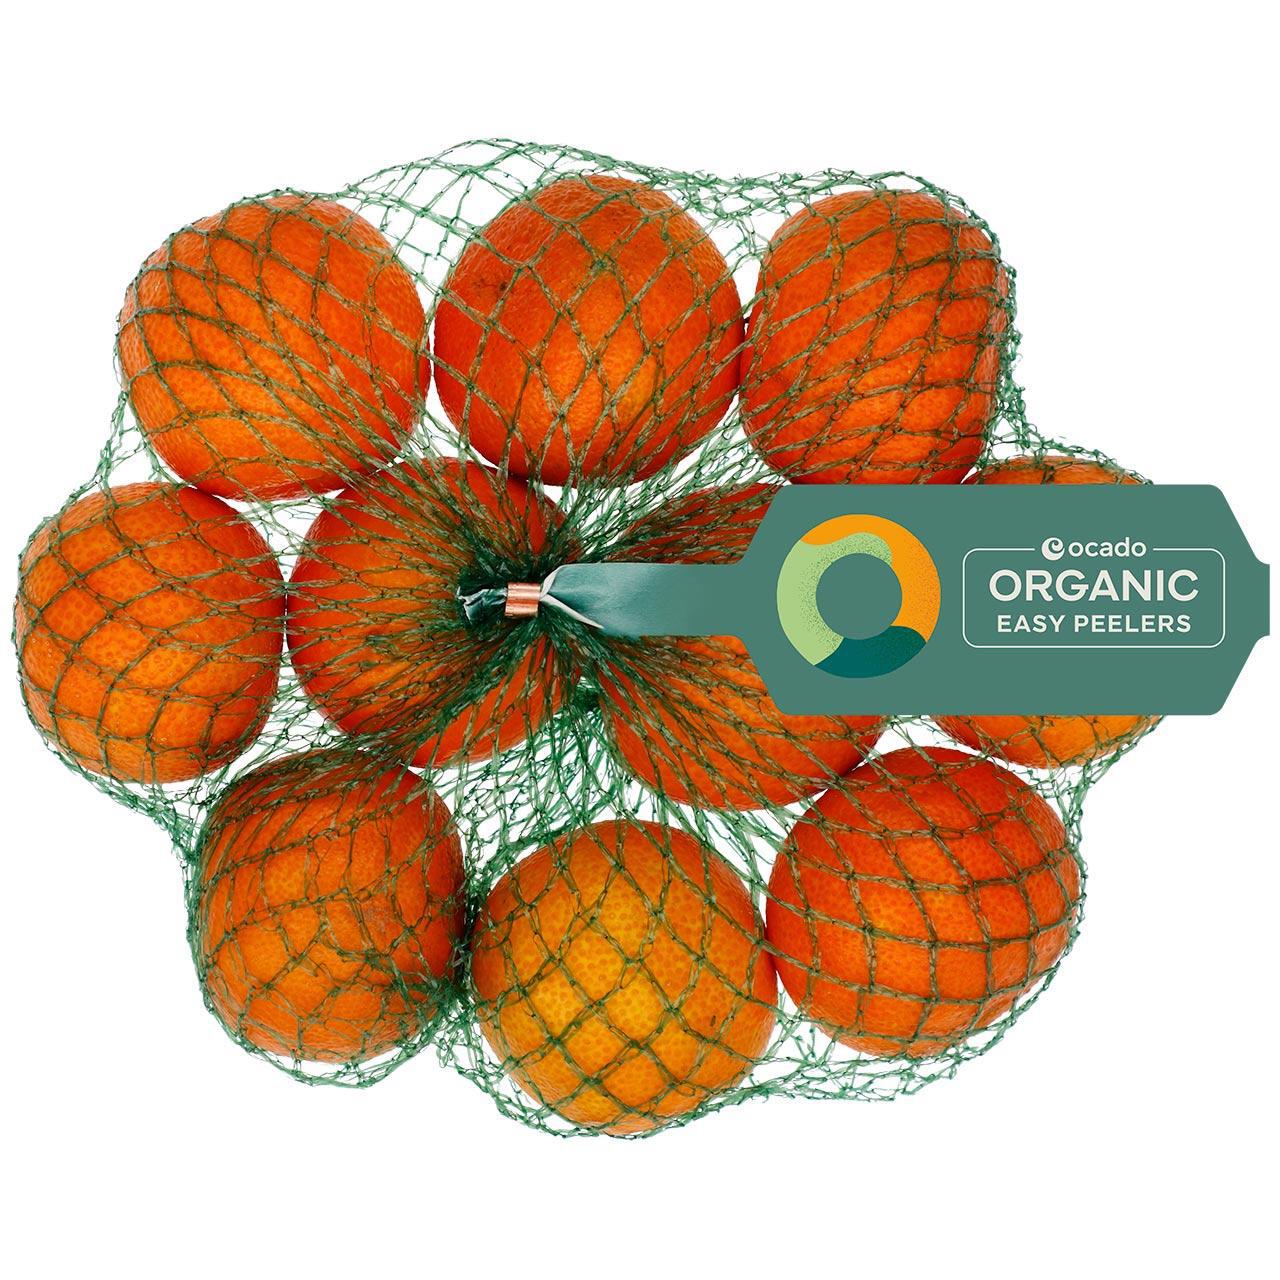 Ocado Organic Easy Peelers 500g